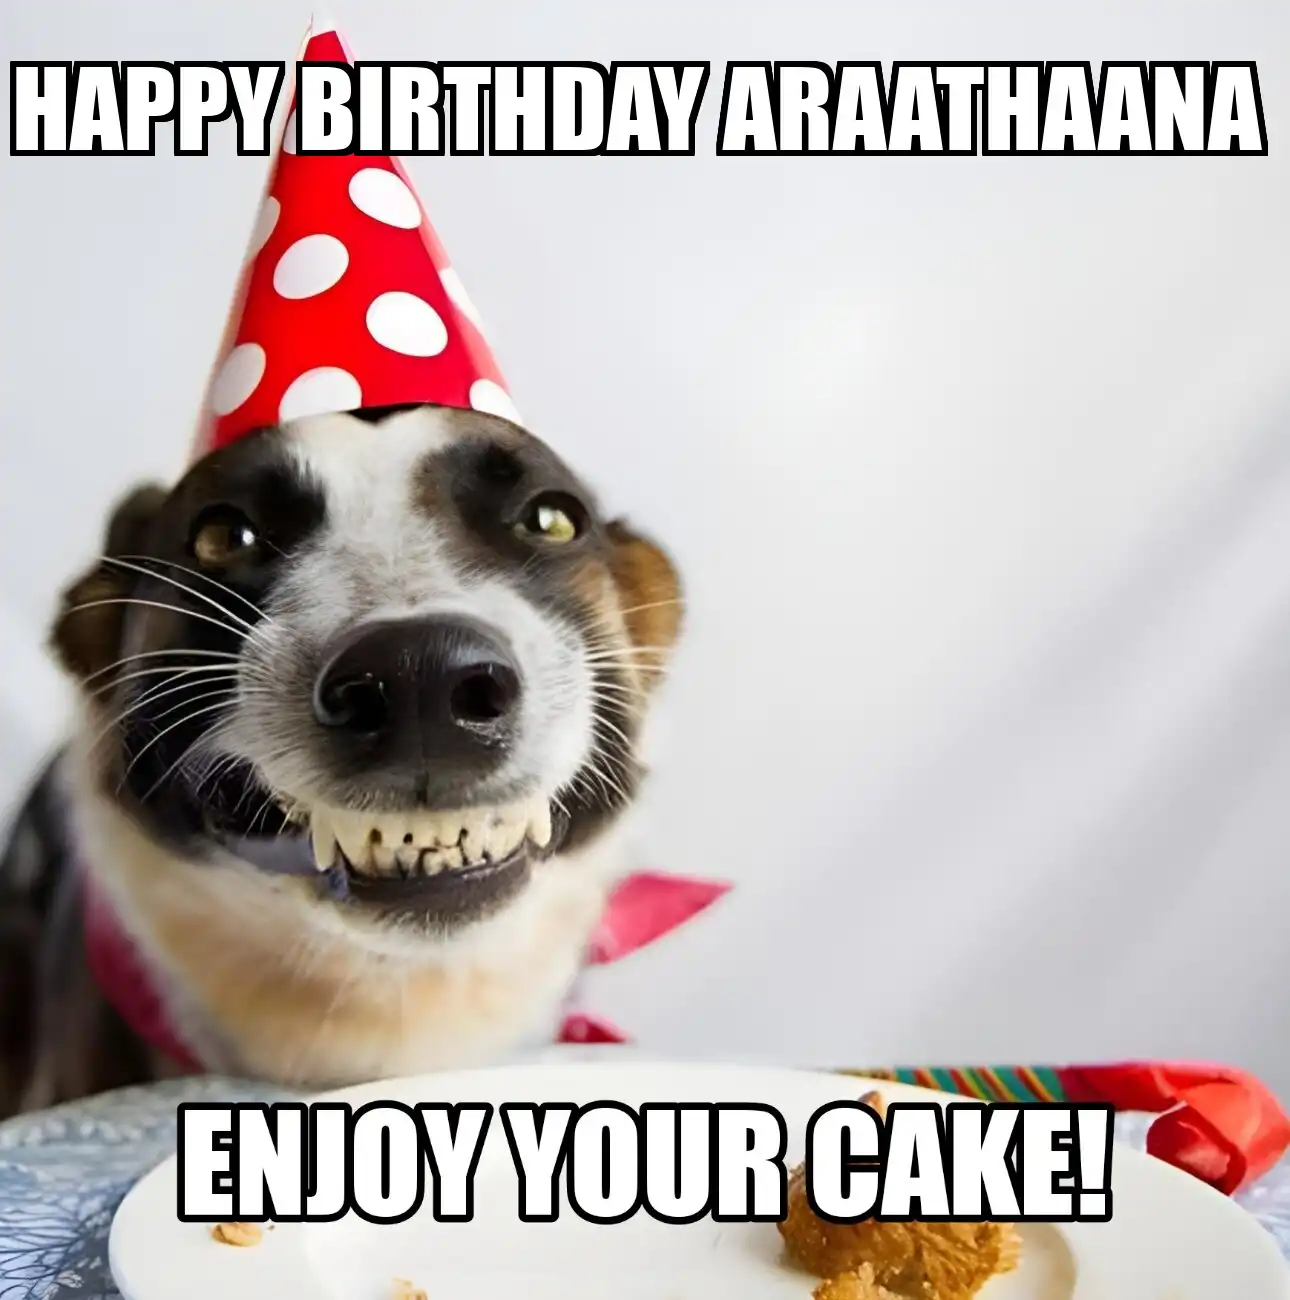 Happy Birthday Araathaana Enjoy Your Cake Dog Meme